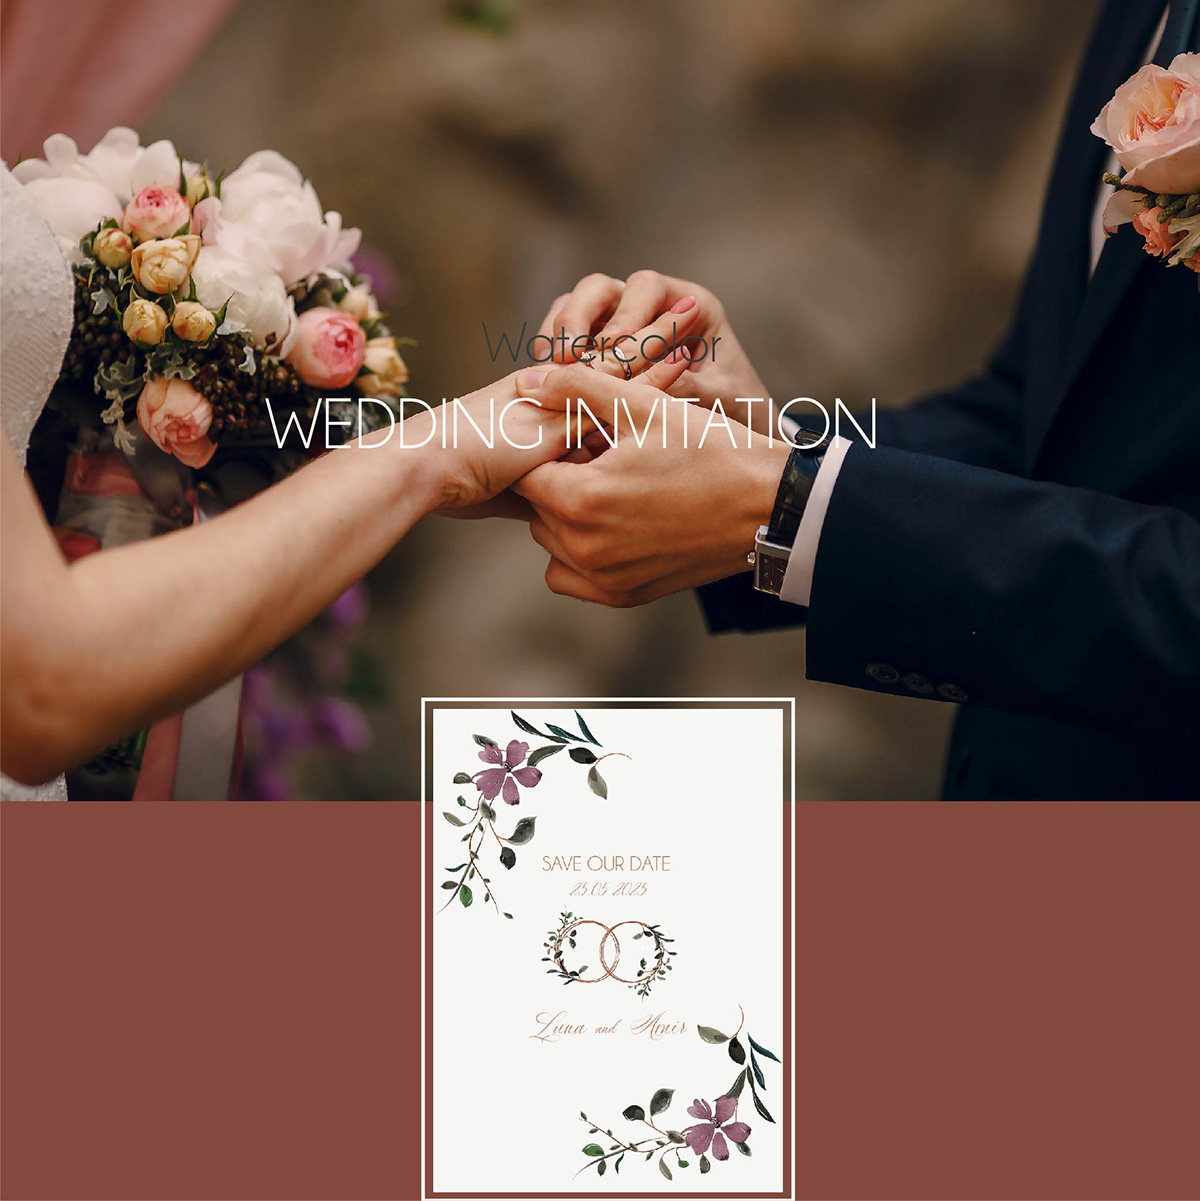 Watercolor wedding invitation in rustic style